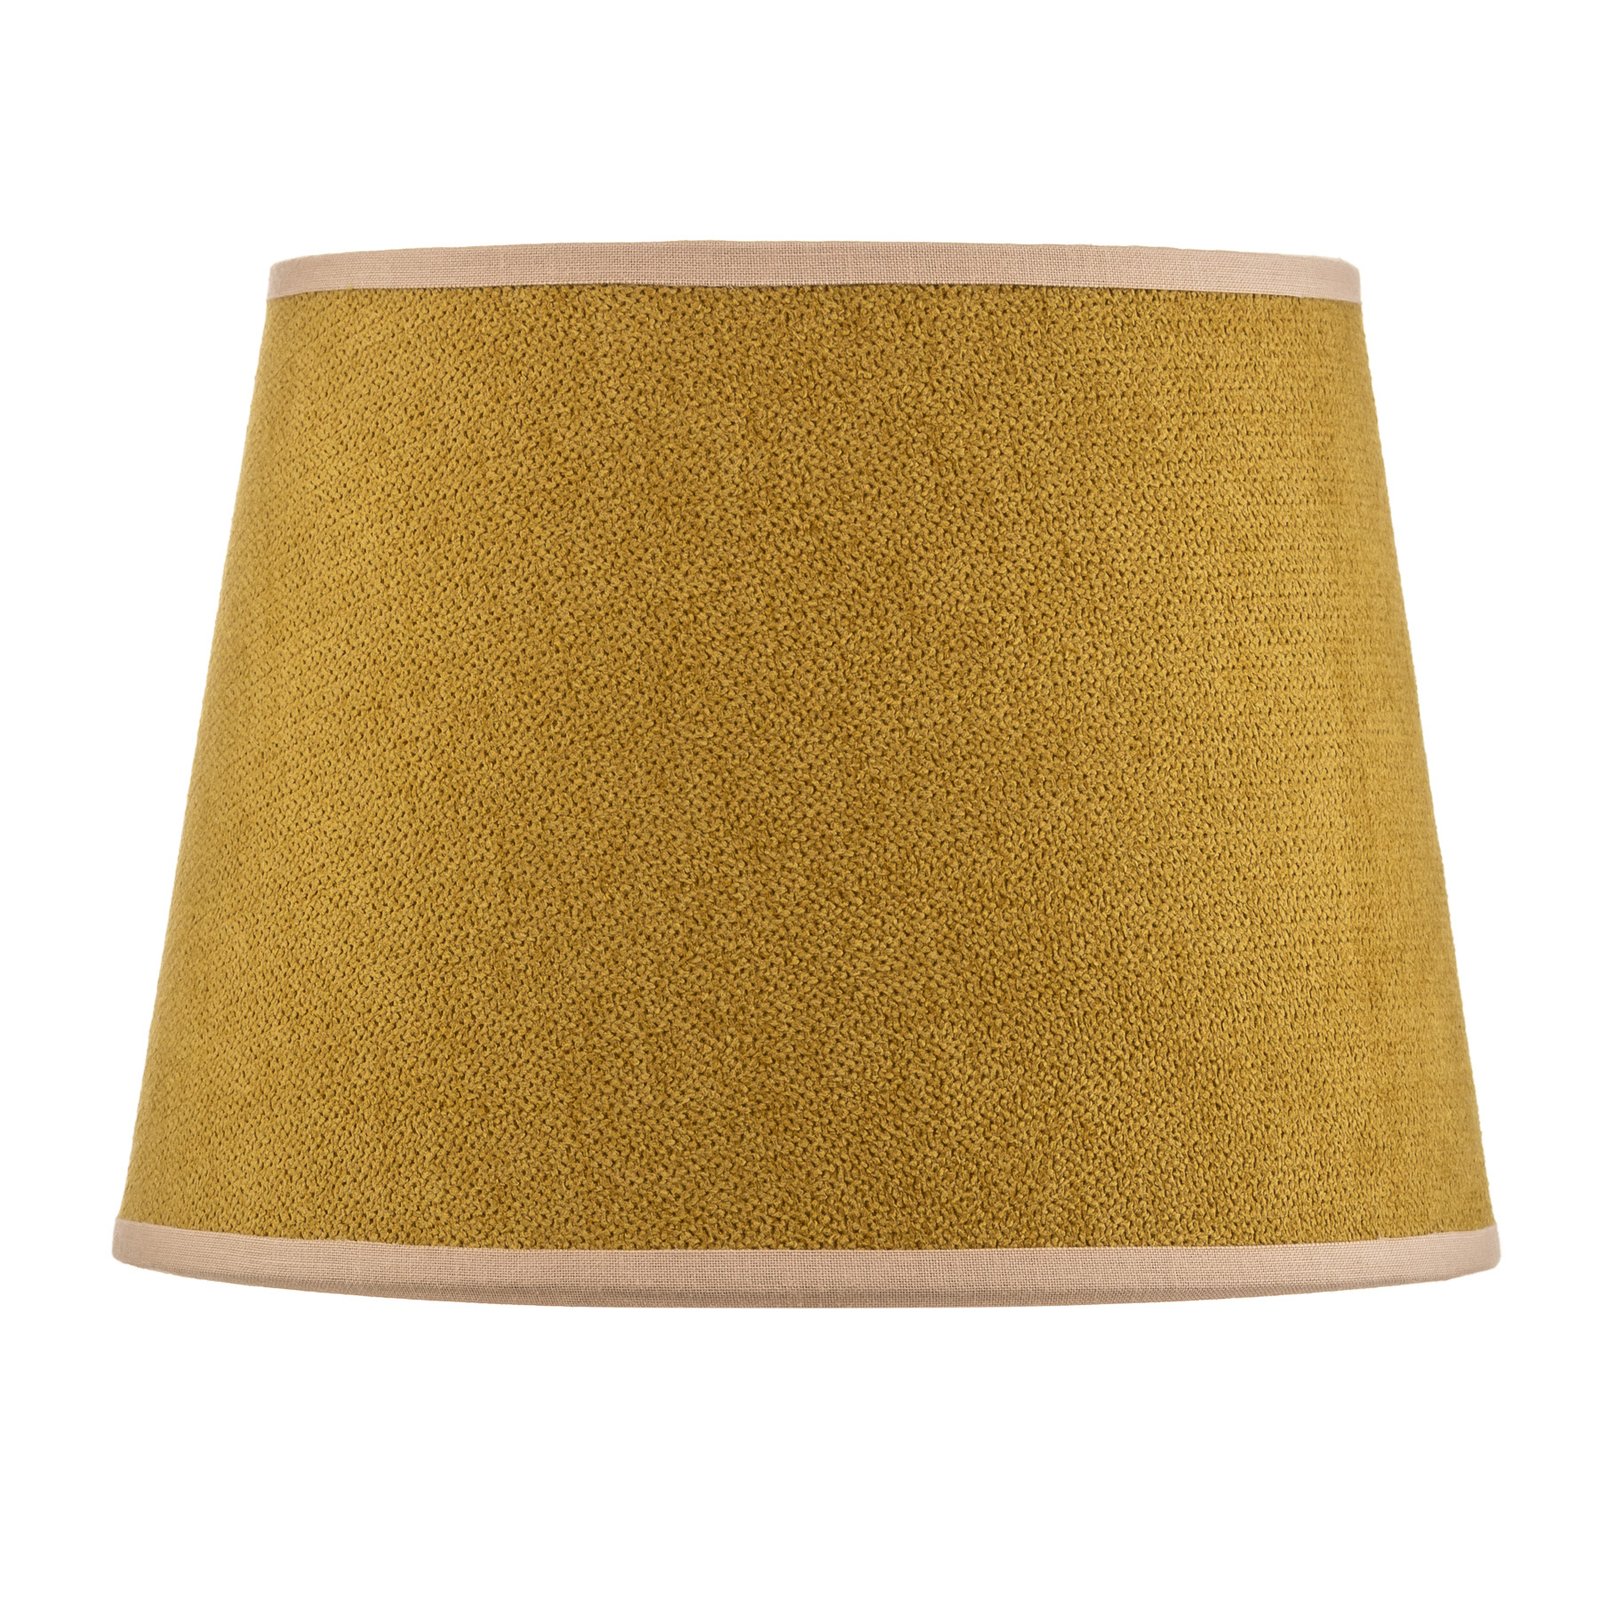 Classic S lampshade, woven, mustard yellow